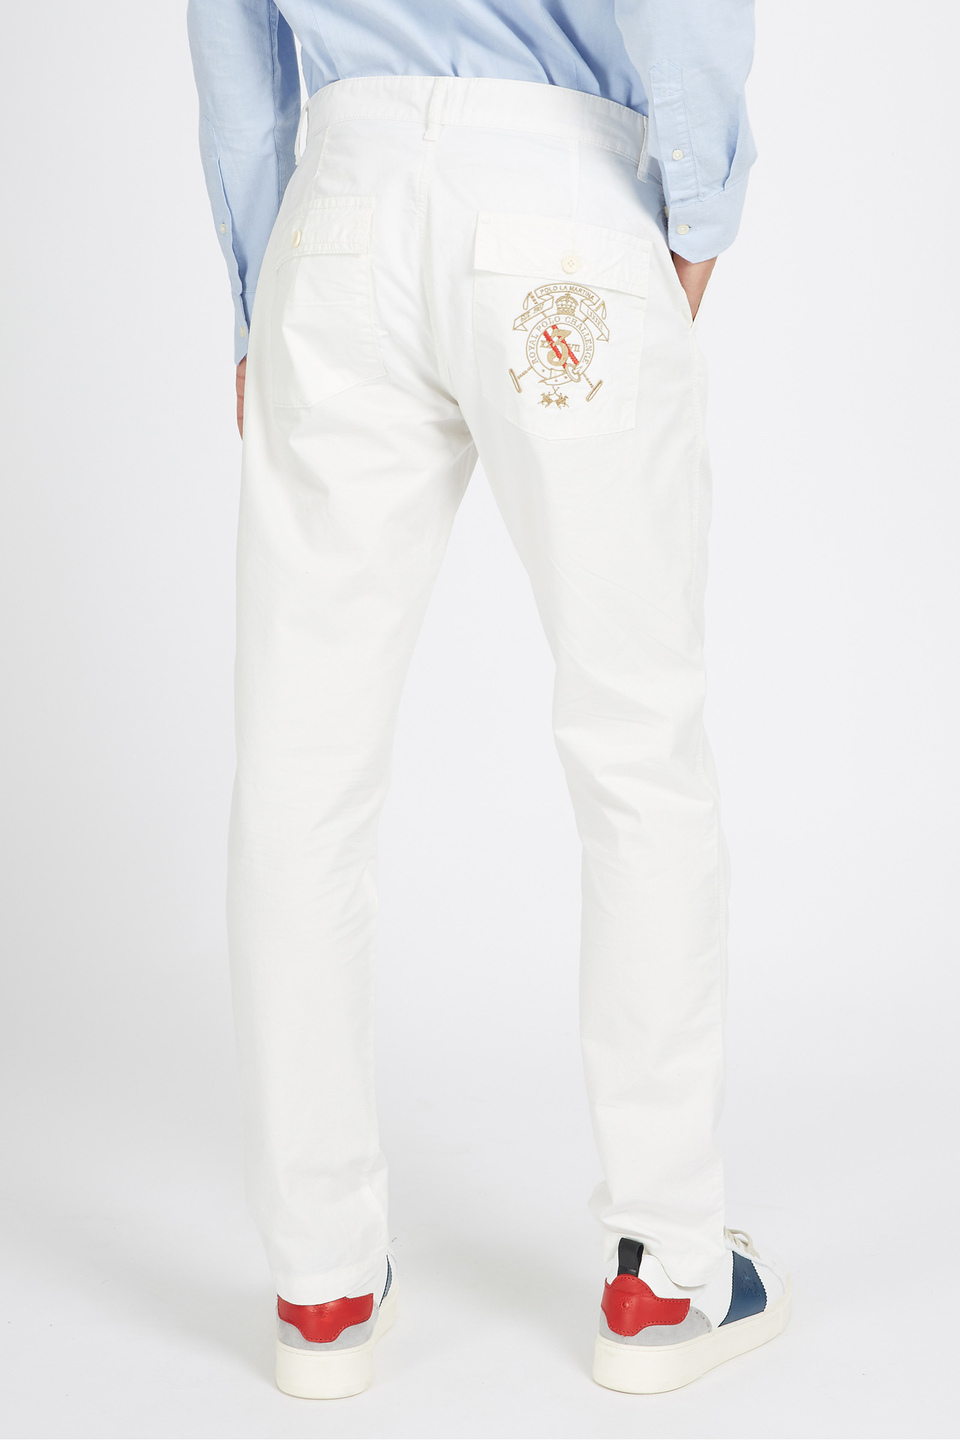 Pantalone da uomo 100% cotone regular fit- Vardice | La Martina - Official Online Shop